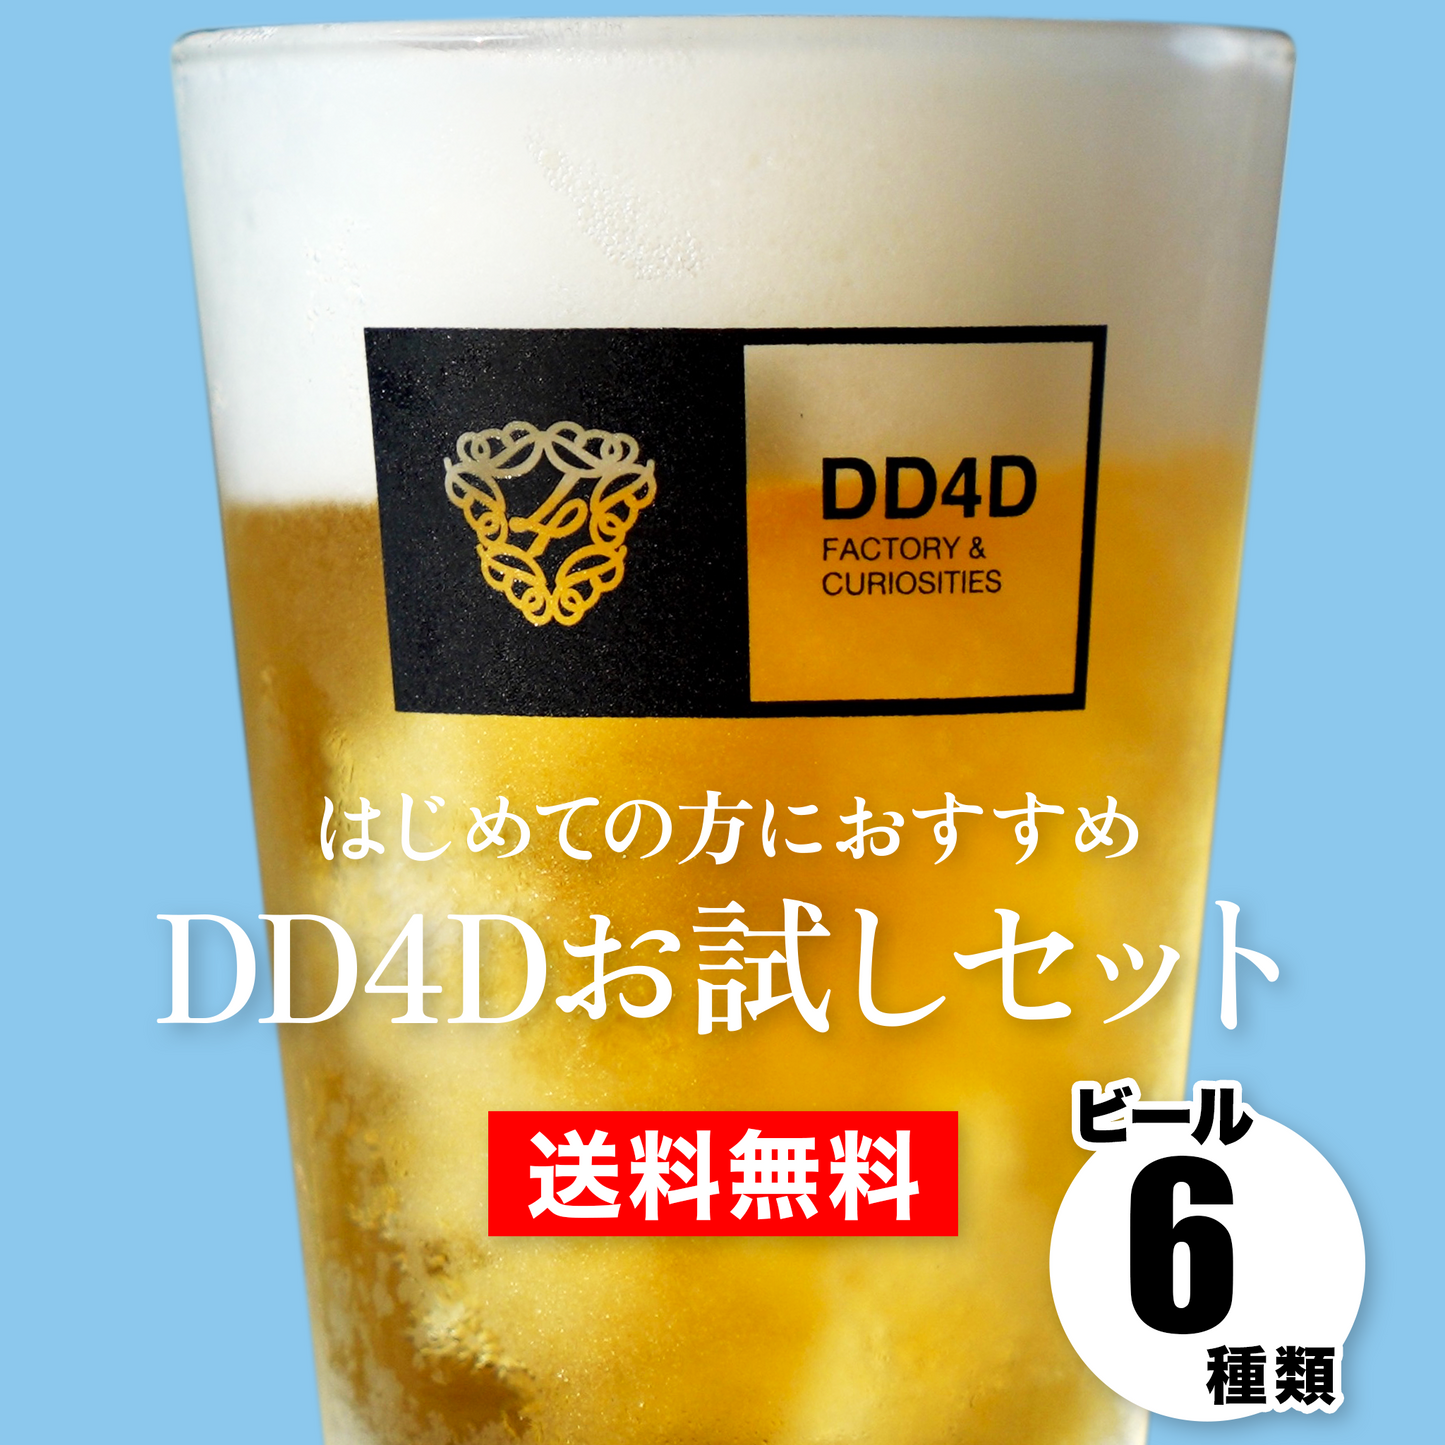 DD4Dお試しセット6本入り (送料無料) 11月30日リニューアル